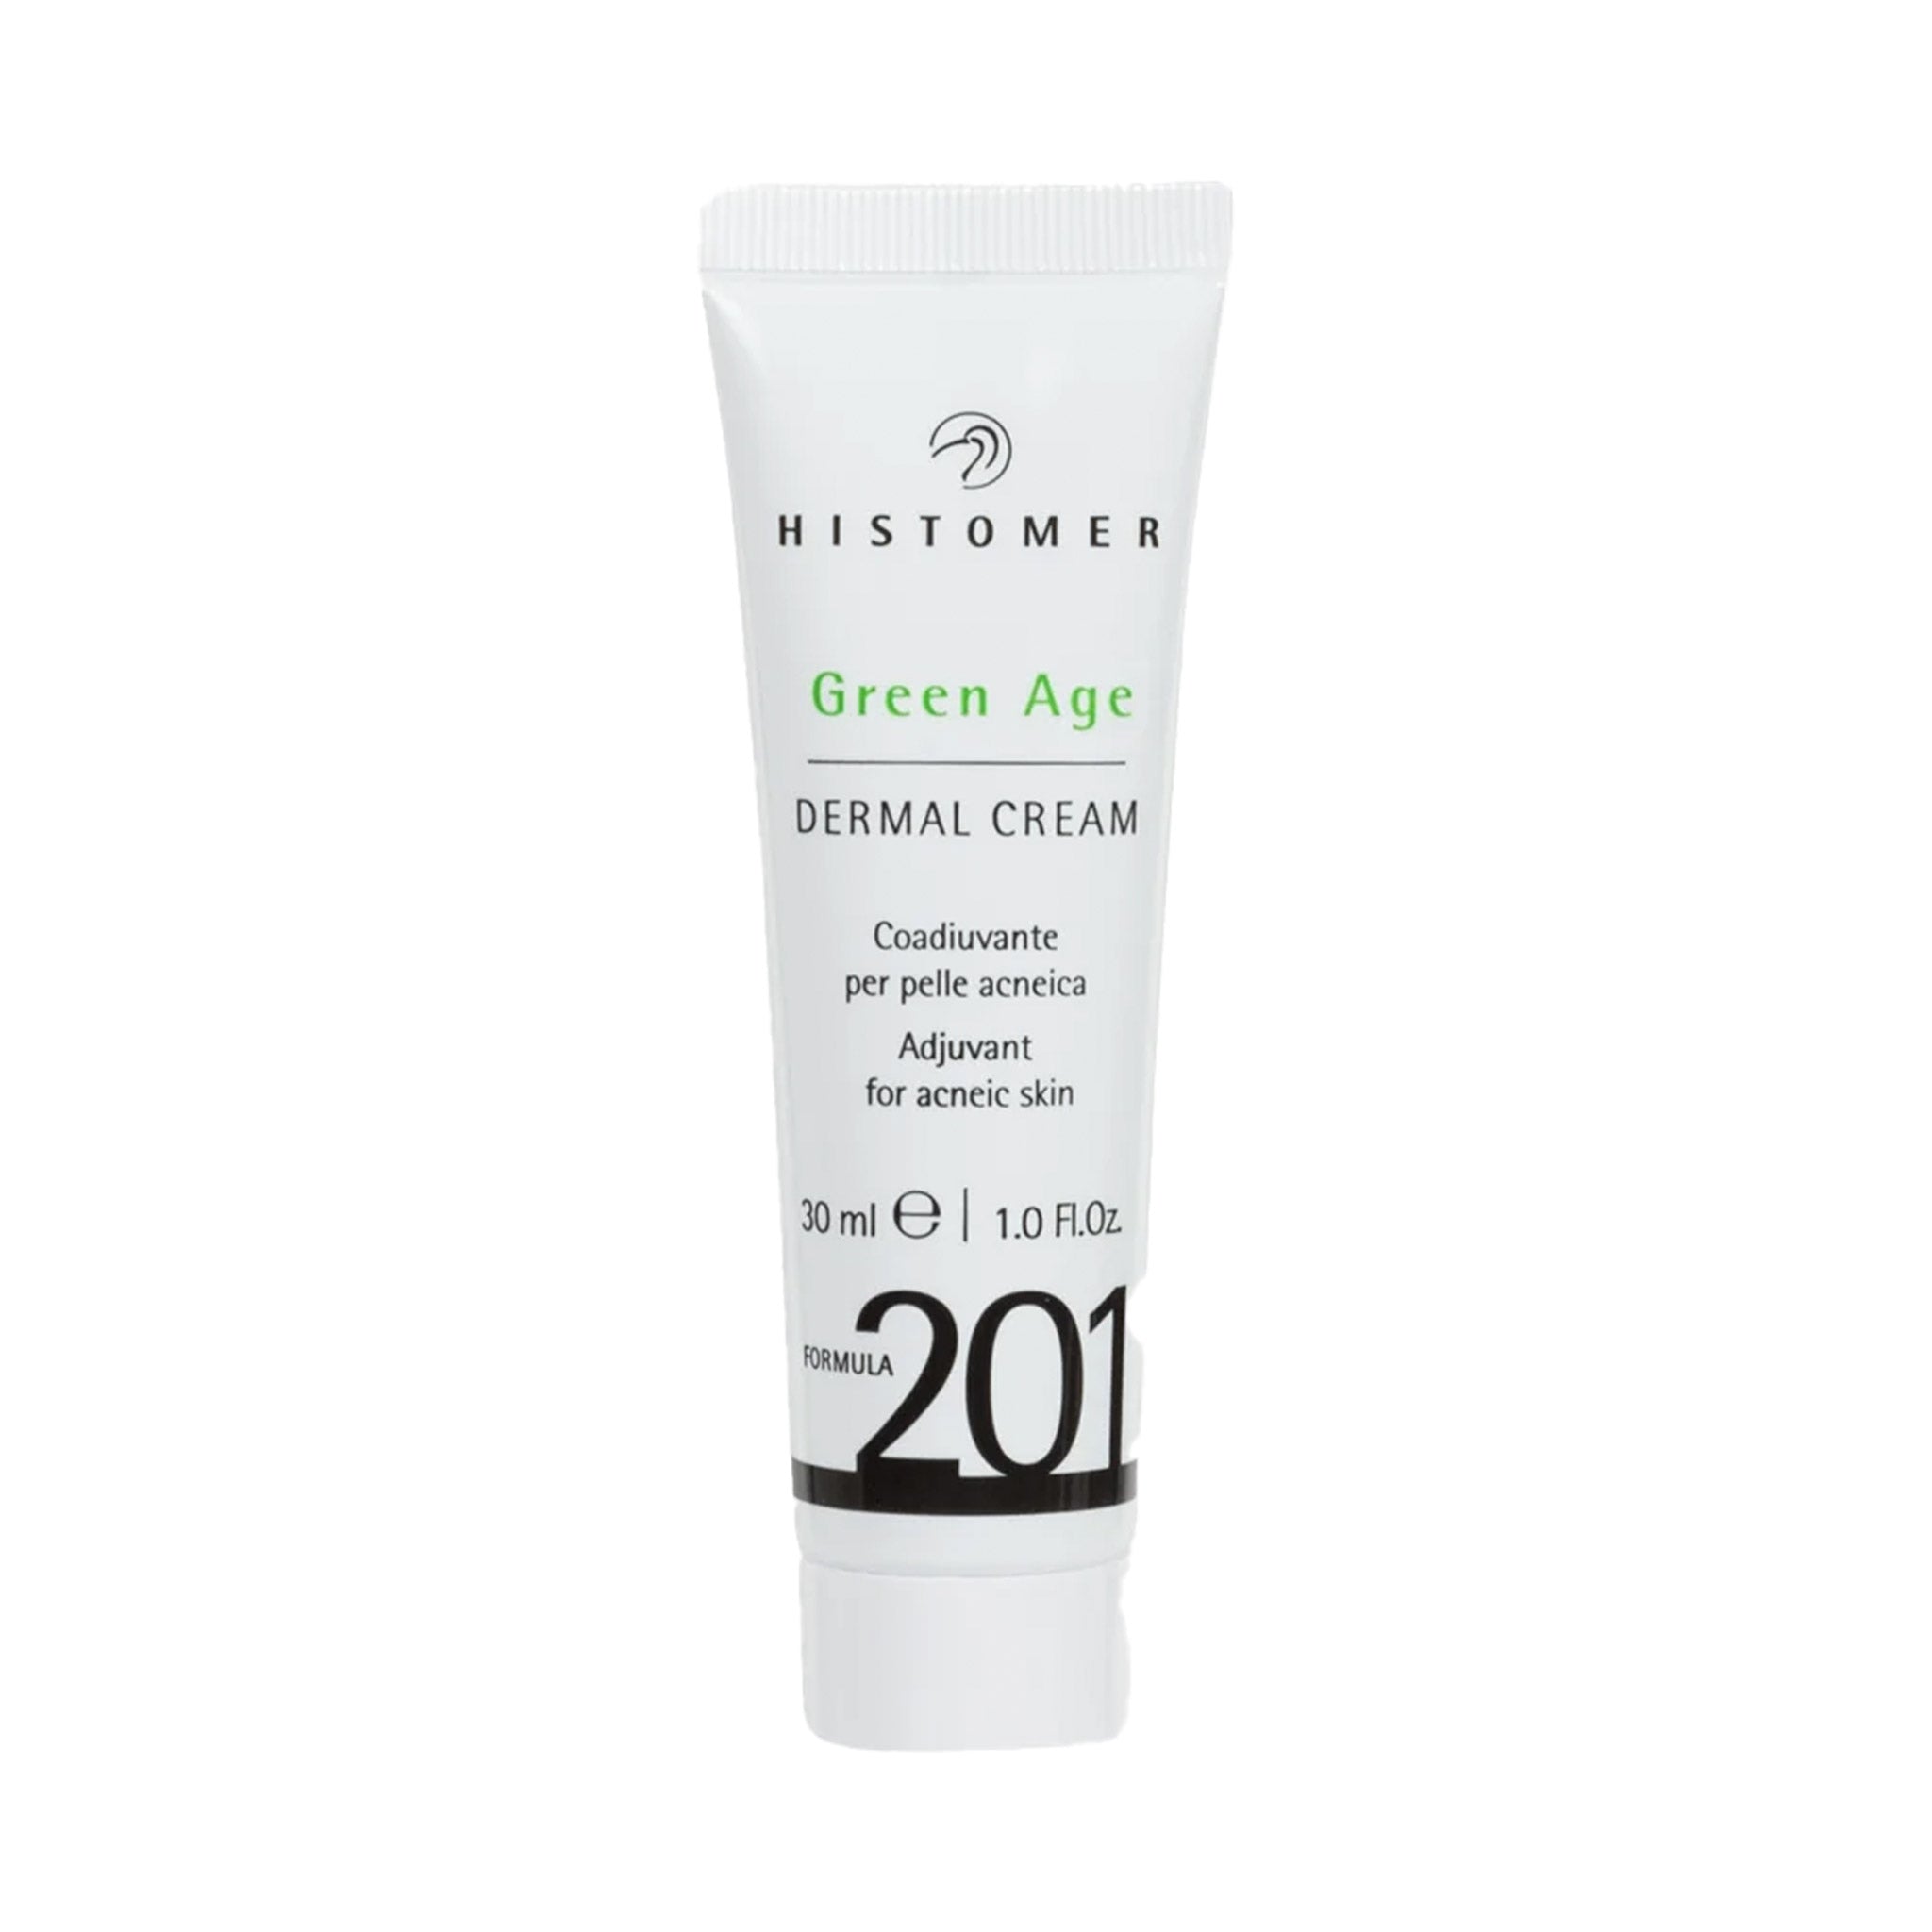 Histomer Green Age Dermal Cream